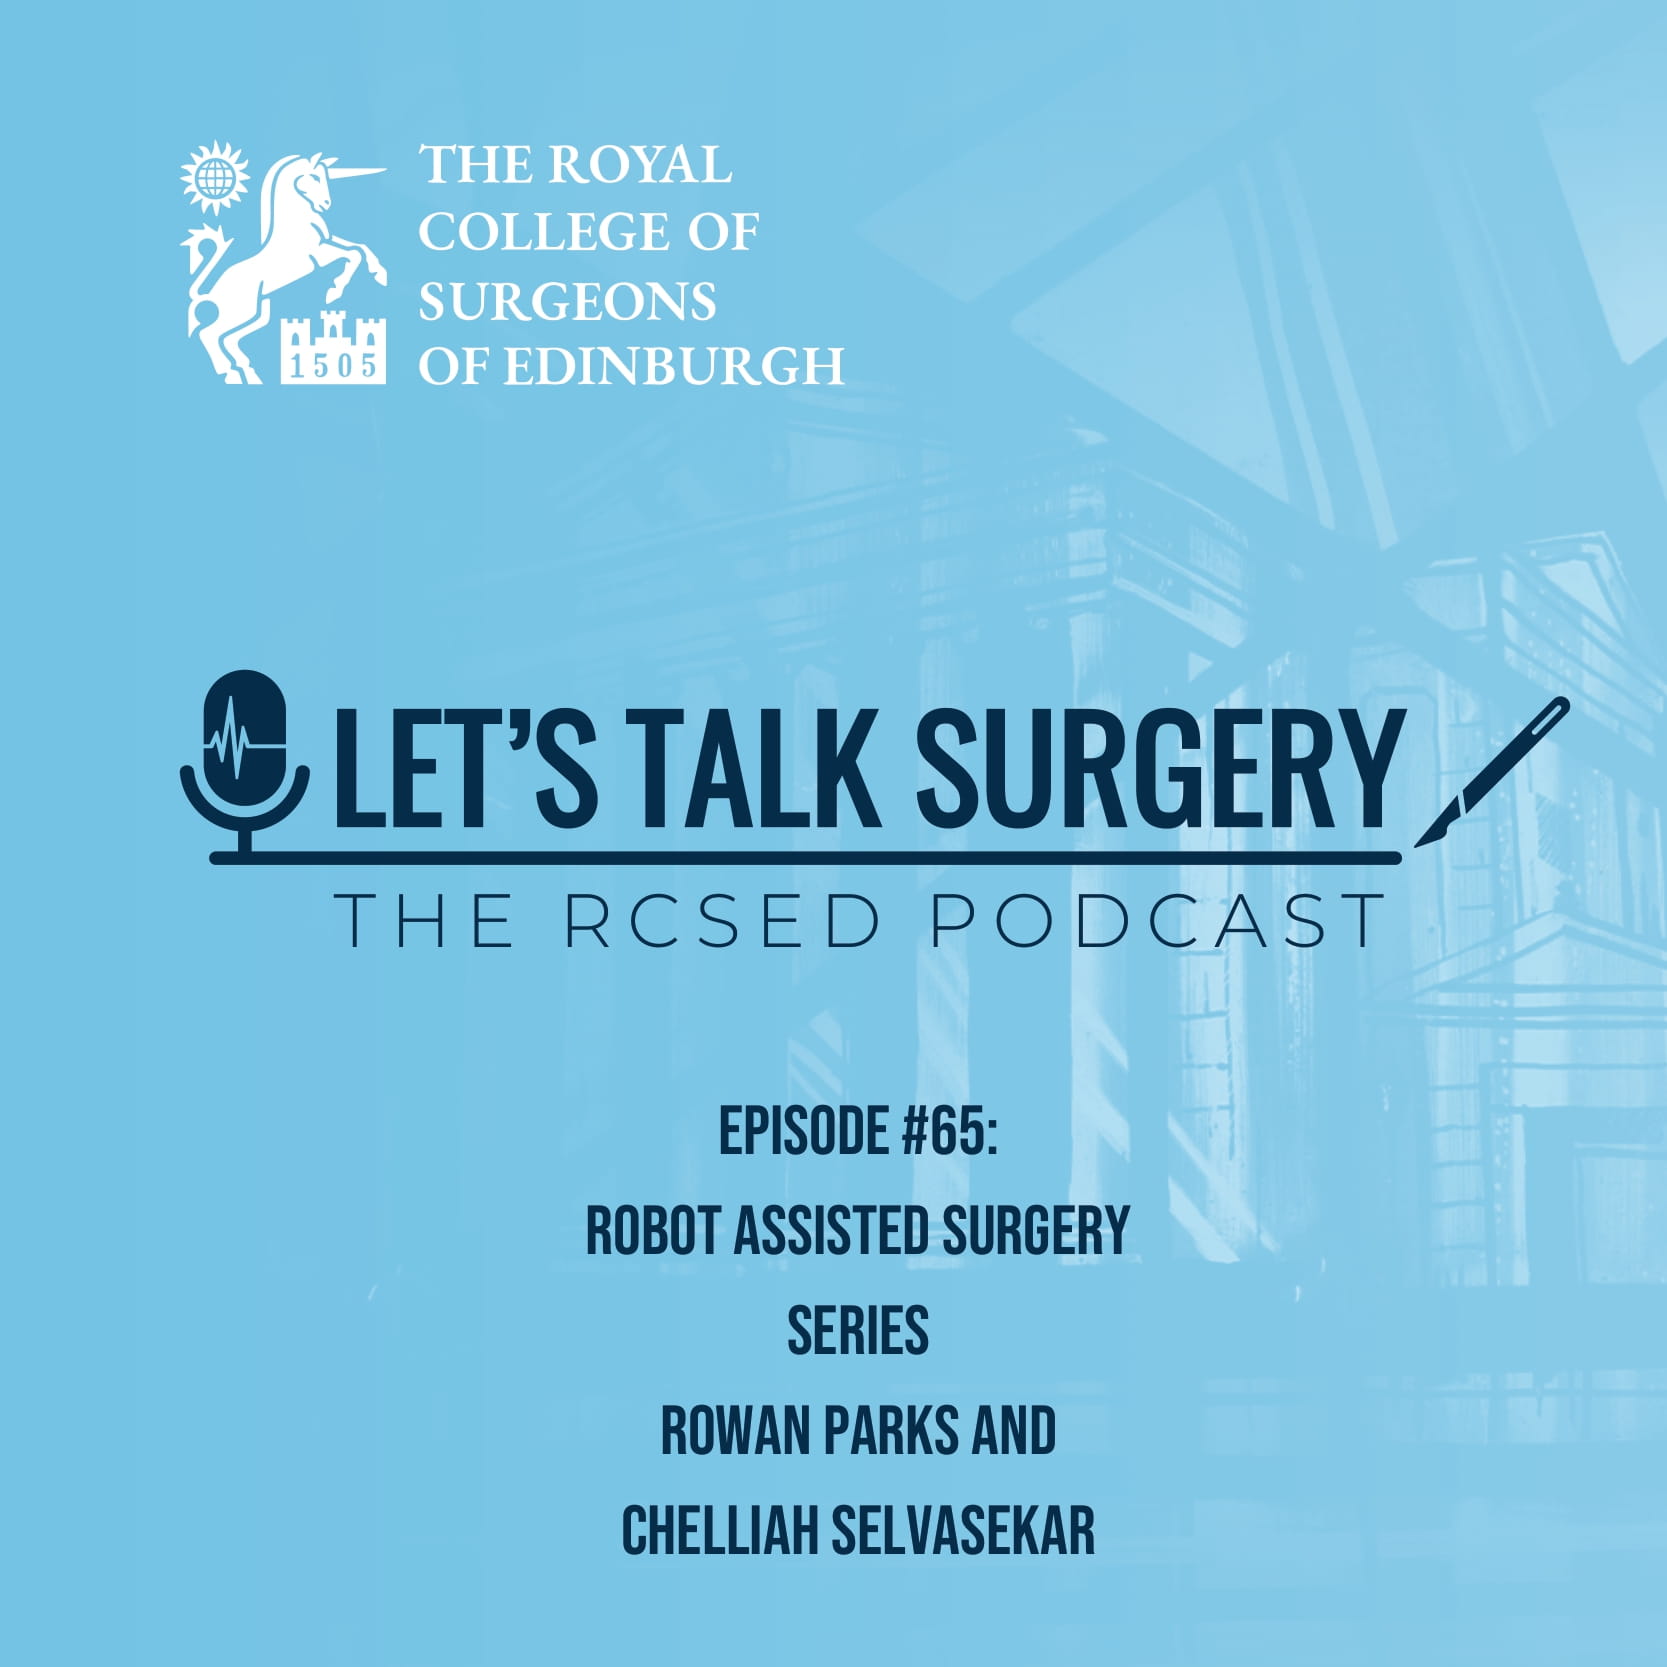 Robot Assisted Surgery Series – Rowan Parks and Chelliah Selvasekar